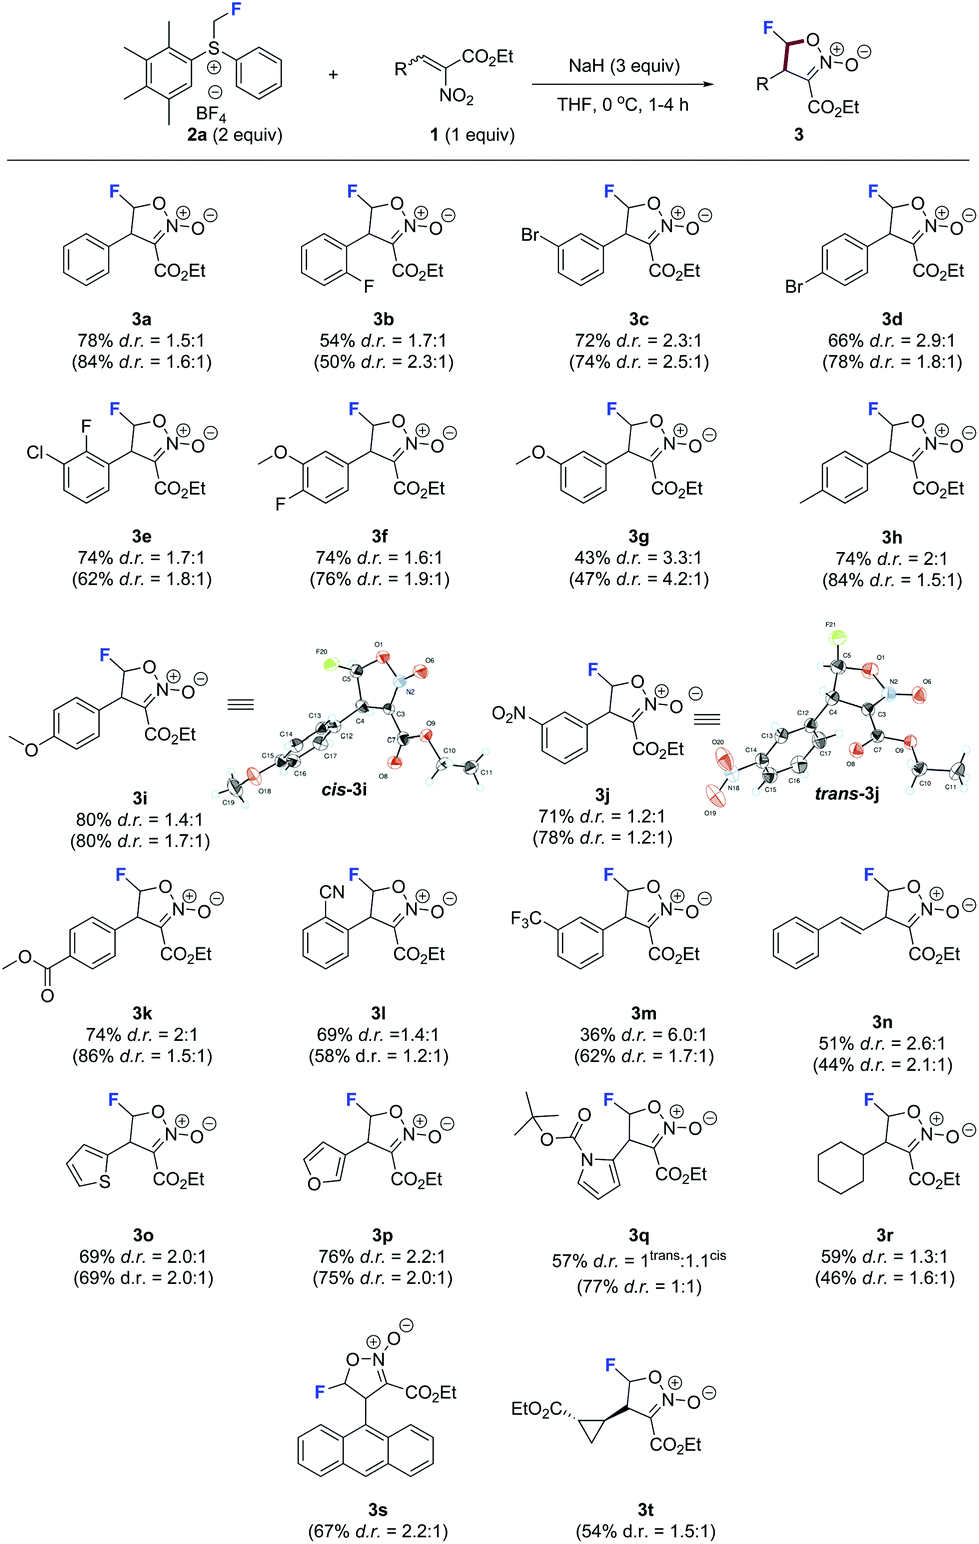 Monofluorinated 5 Membered Rings Via Fluoromethylene Transfer Synthesis Of Monofluorinated Isoxazoline N Oxides Organic Biomolecular Chemistry Rsc Publishing